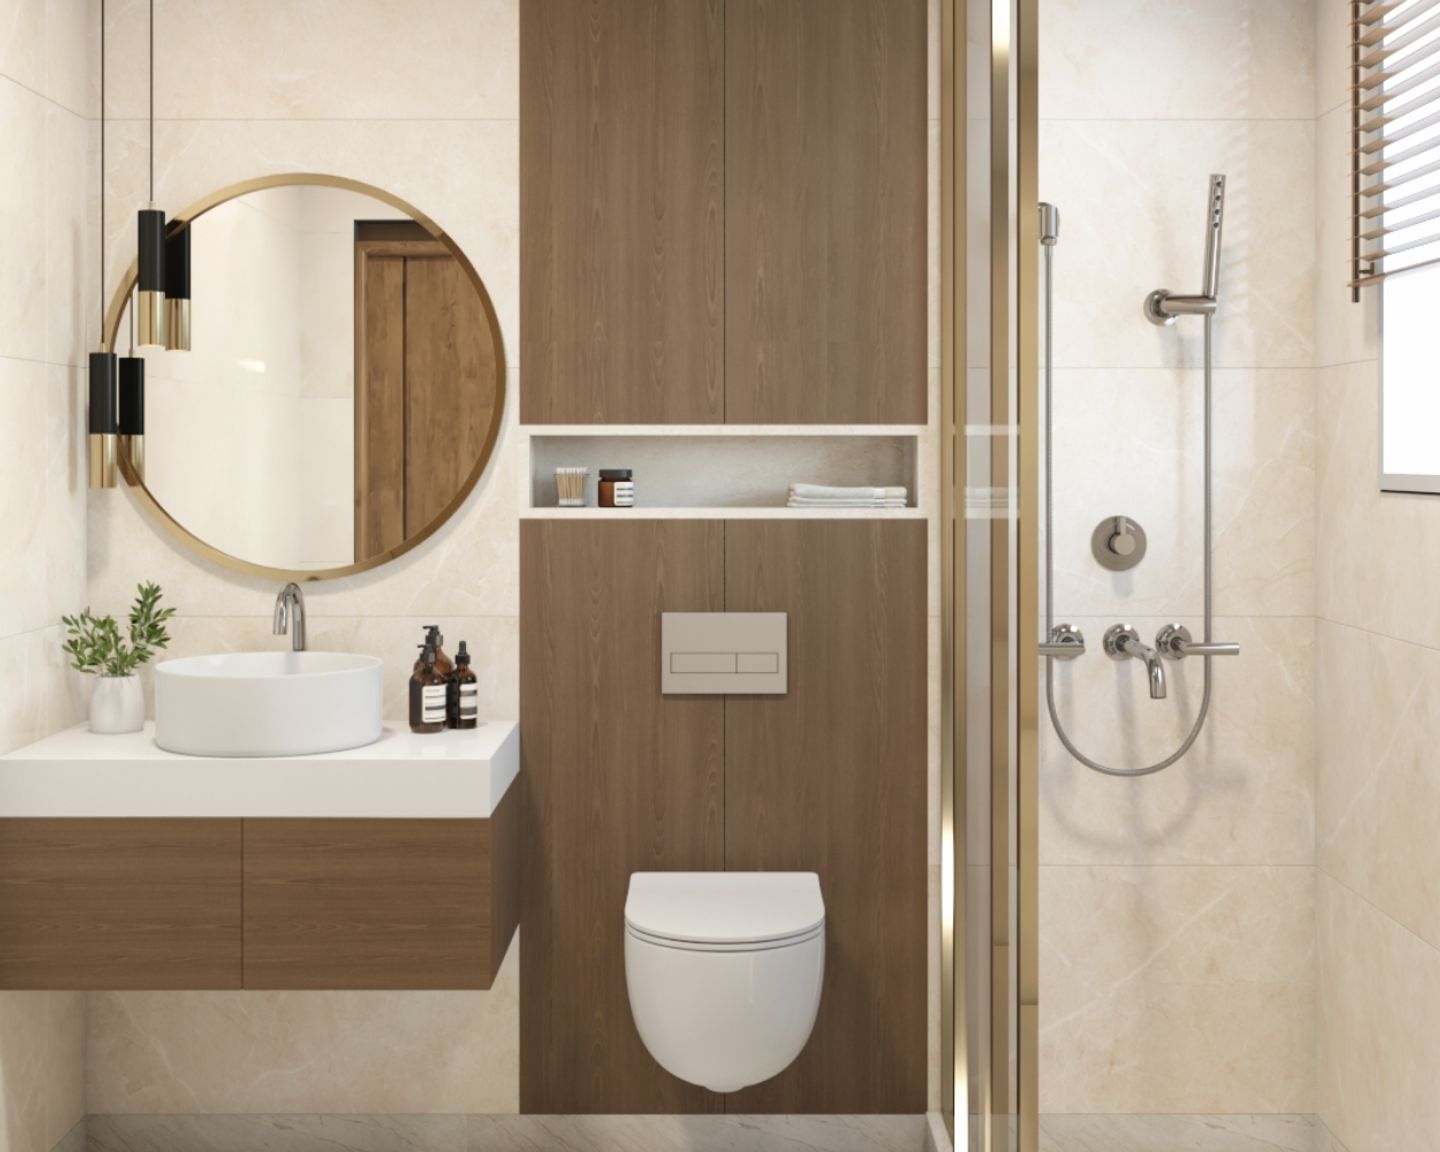 High-Gloss Cream-Toned Bathroom Tile Design - Livspace